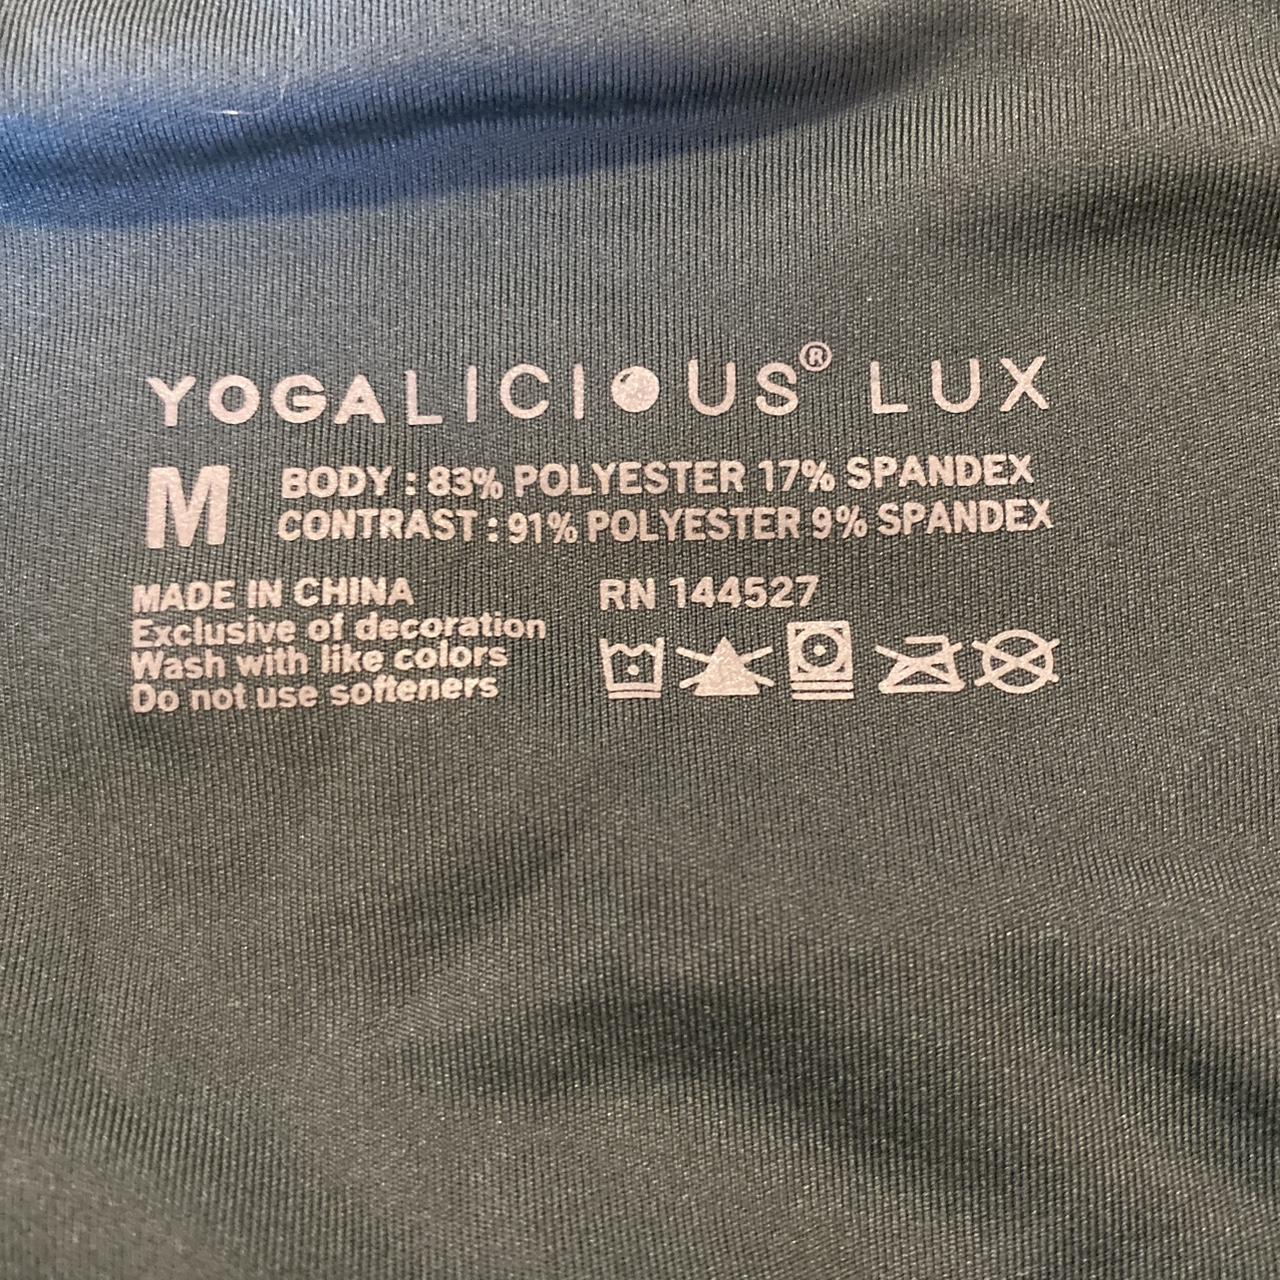 Brand: yogalicious lux Size: medium Color: - Depop